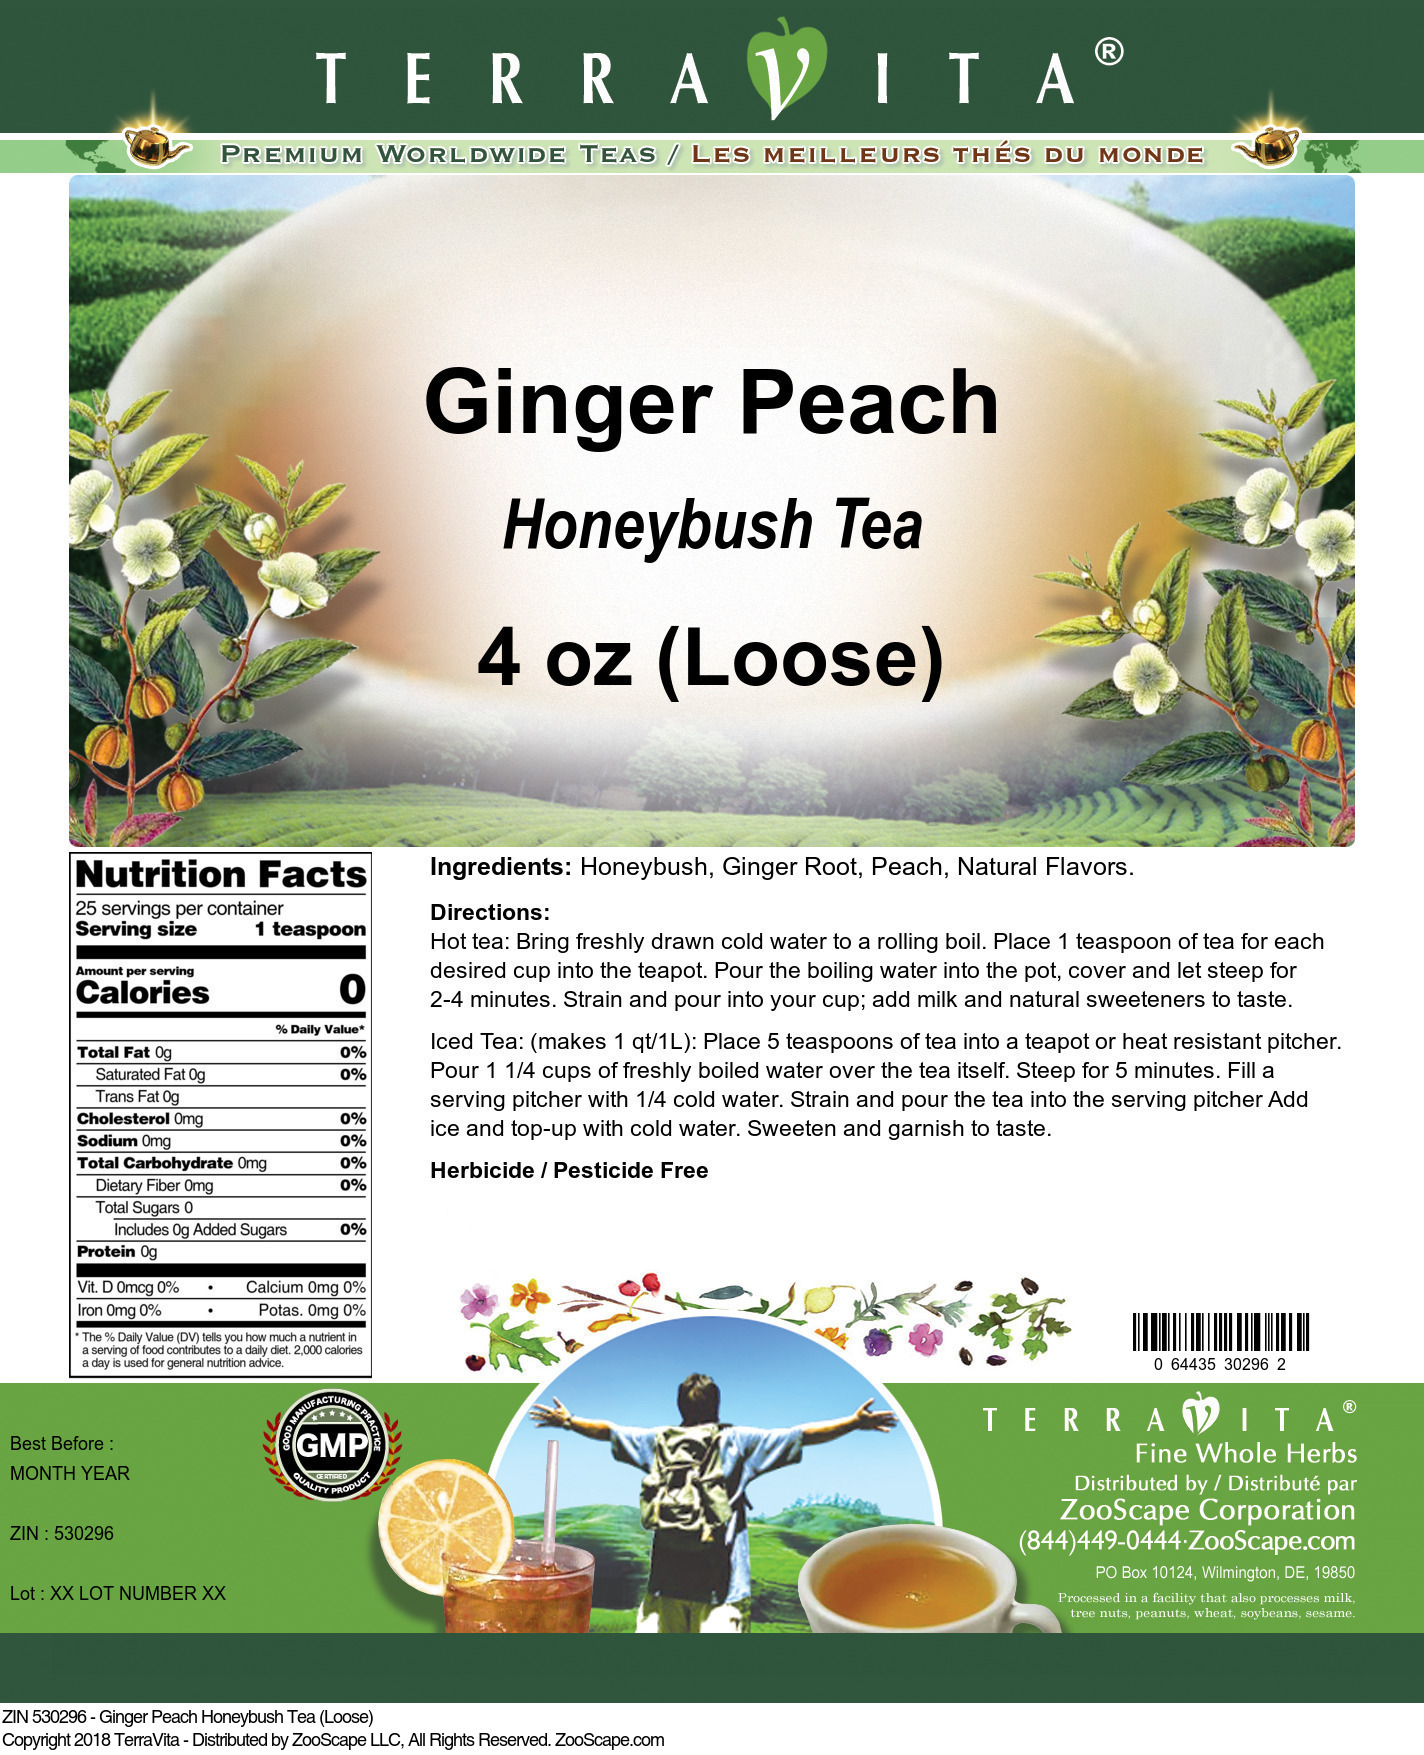 Ginger Peach Honeybush Tea (Loose) - Label